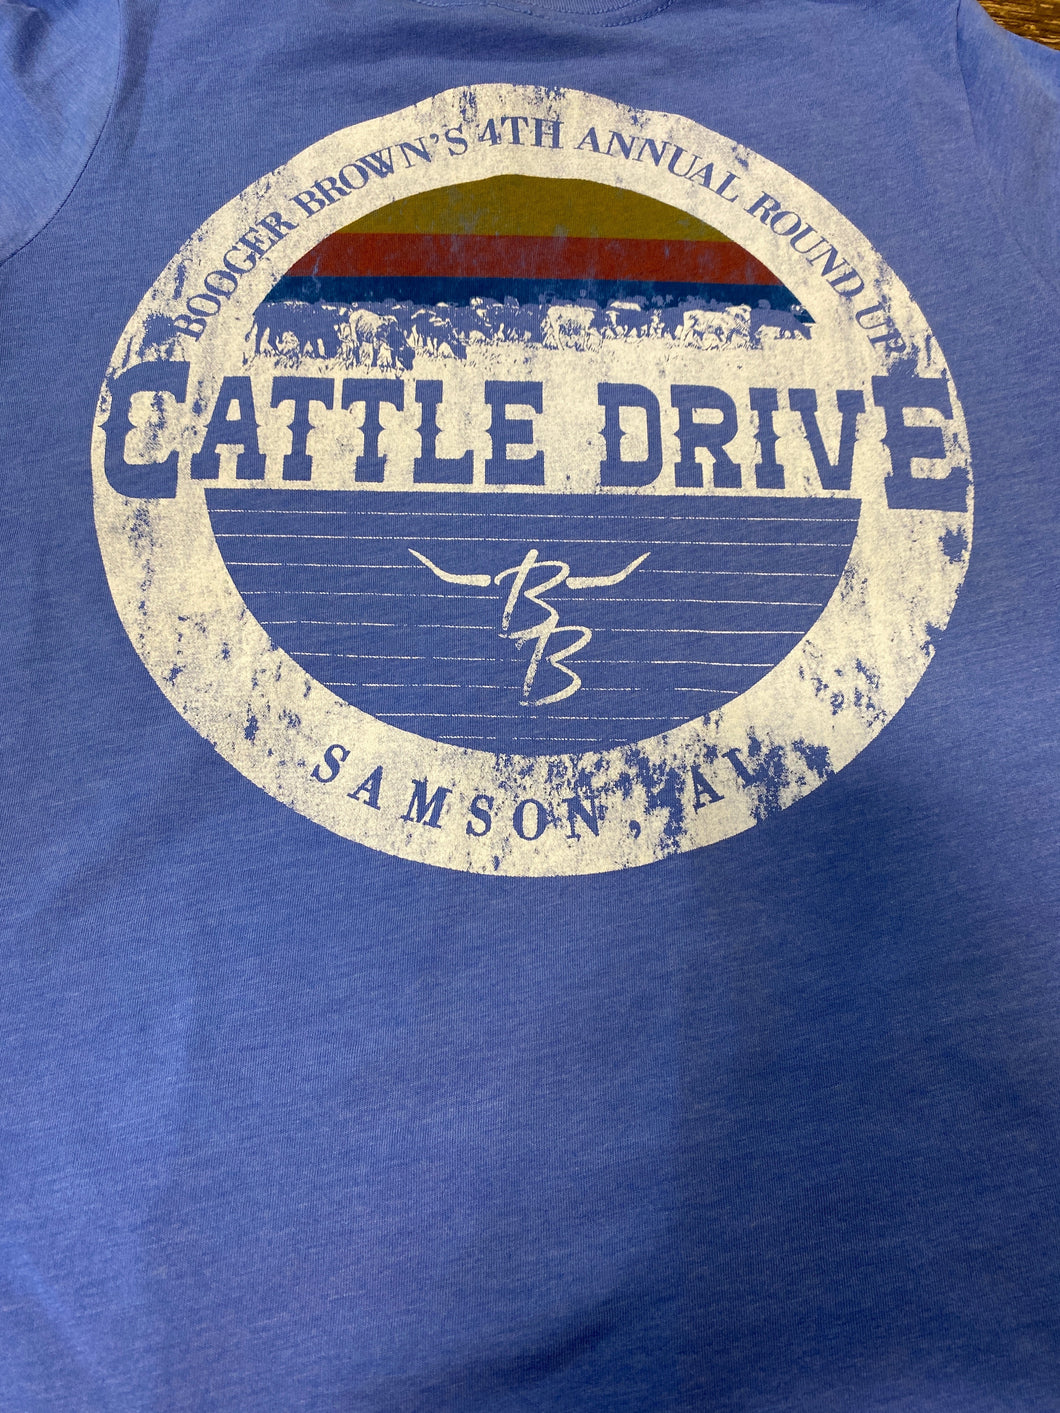 Cattle Drive 2X - 30 Shirts